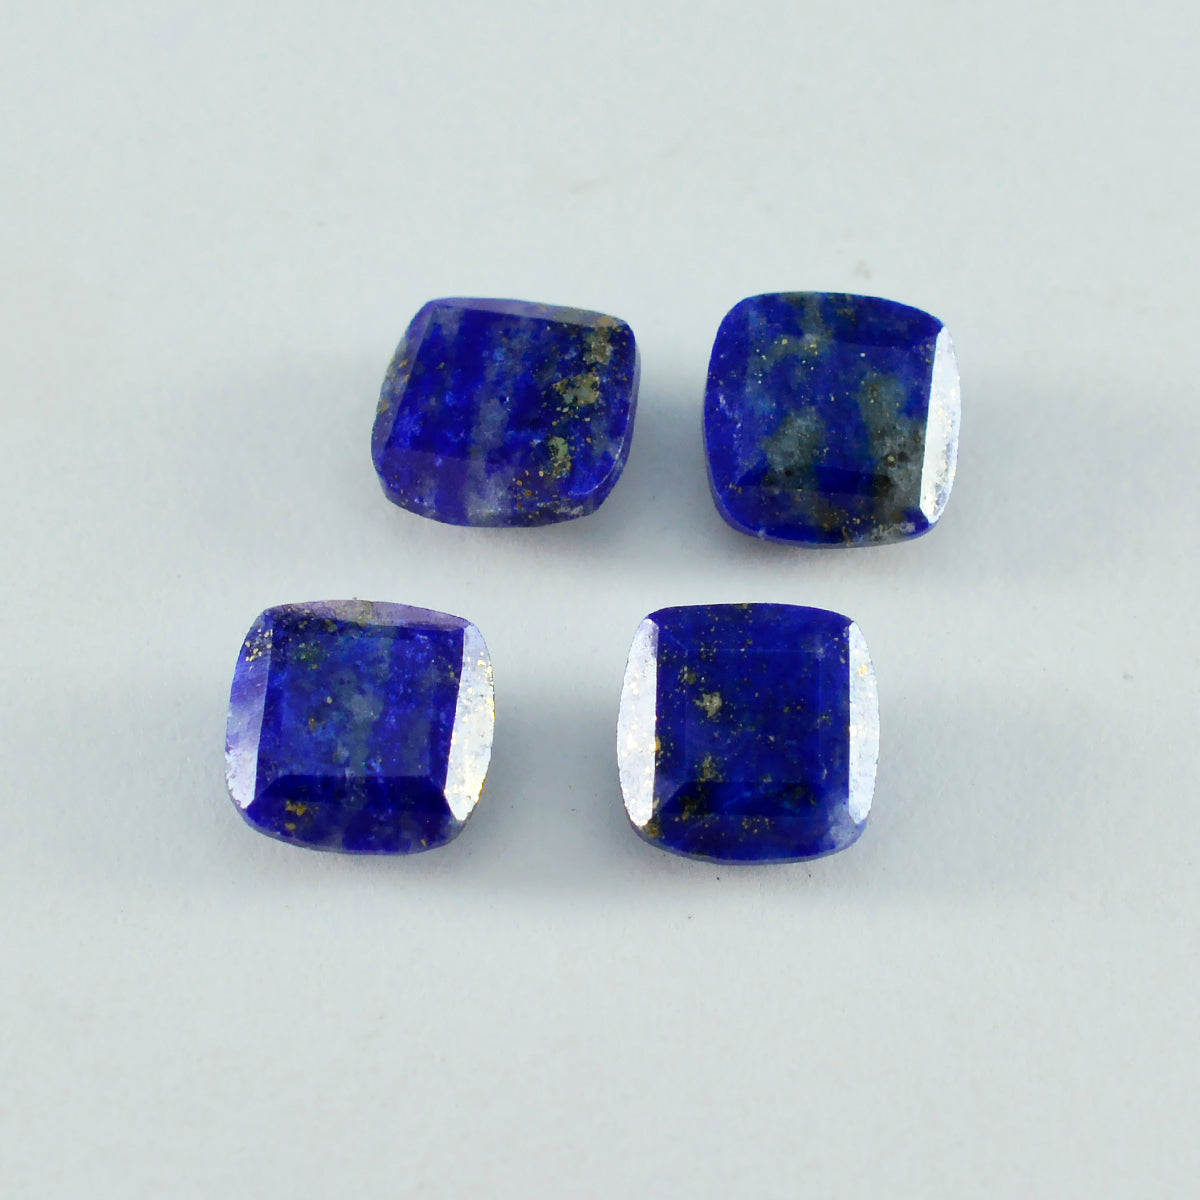 Riyogems 1PC Genuine Blue Lapis Lazuli Faceted 15x15 mm Cushion Shape Good Quality Loose Gemstone